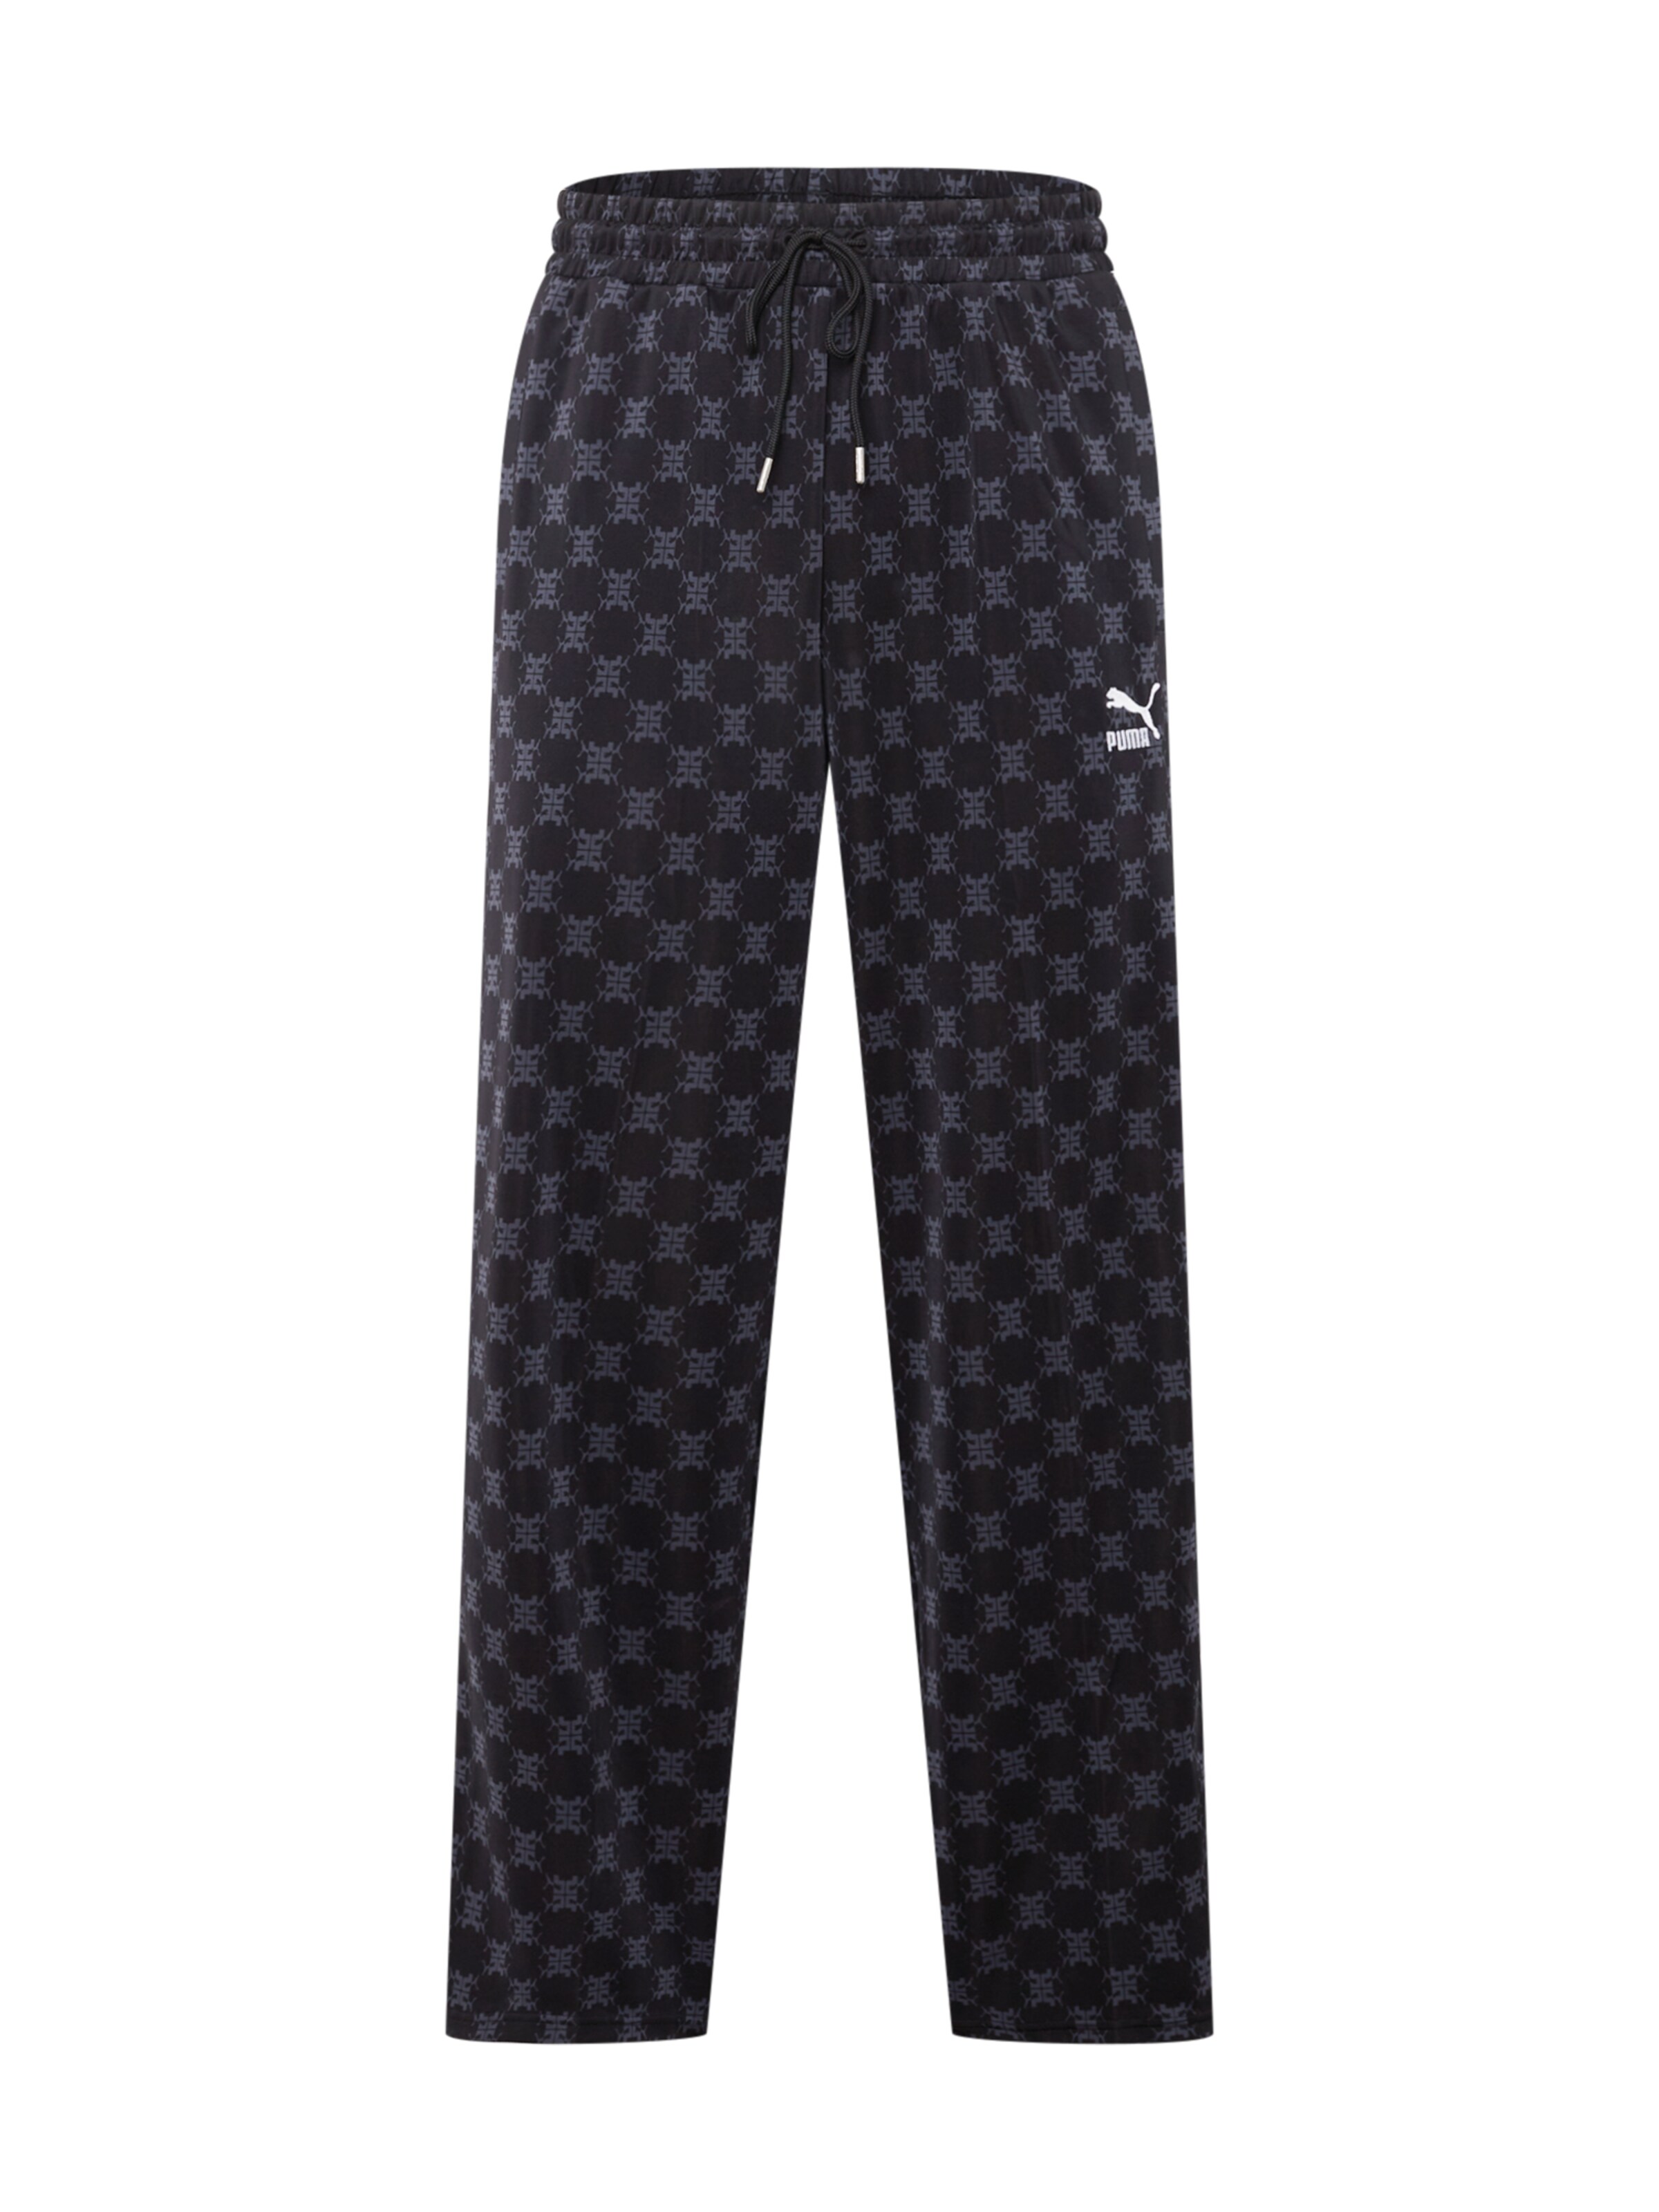 Visiter la boutique PumaPUMA Big & Tall Heritage Pantalon de Pyjama survêtement Homme 